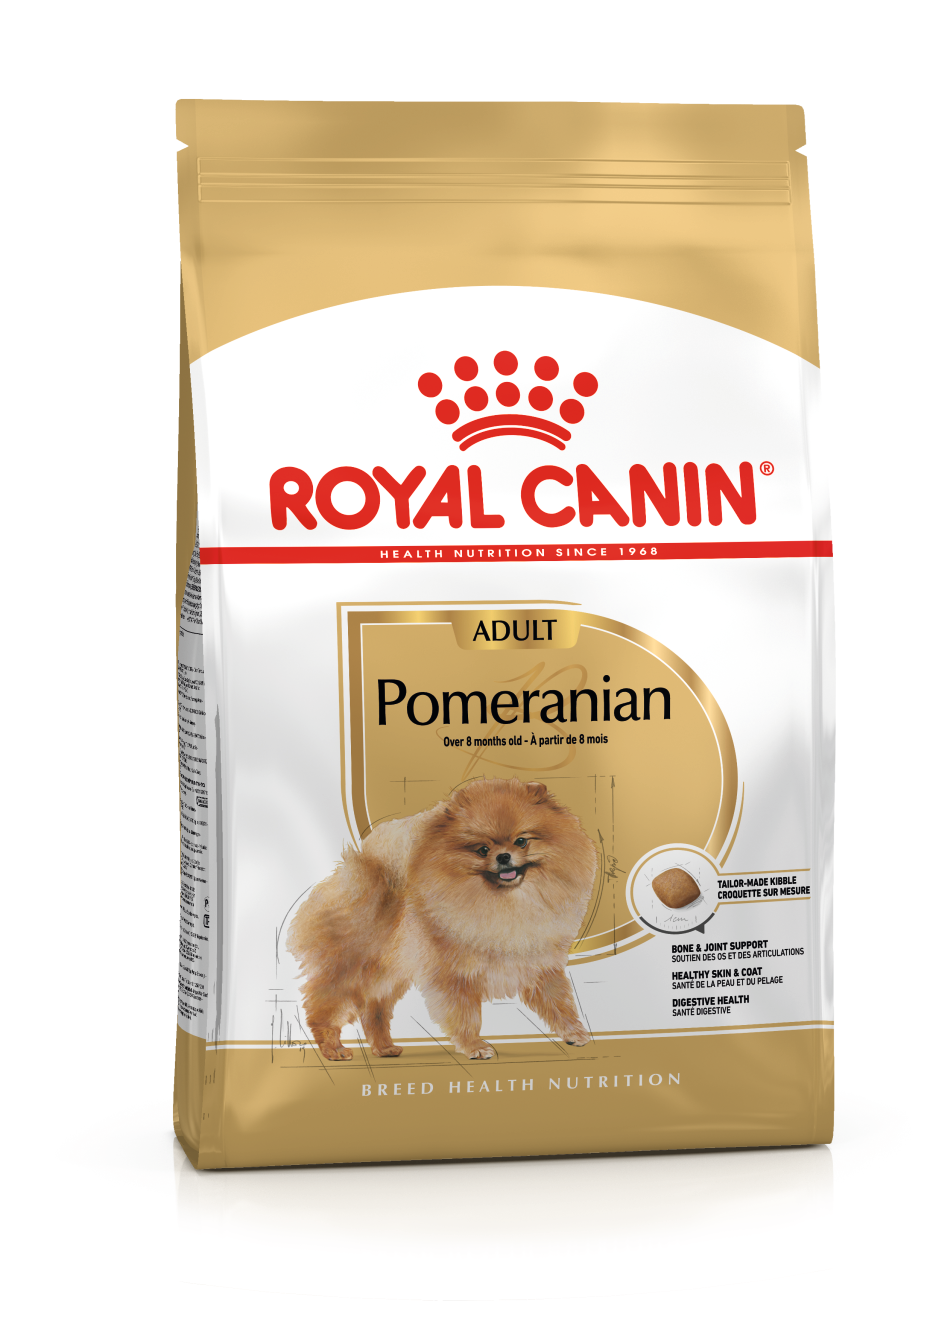 royal canin, Pomeranian, Dog Food, Dry dog food, Dubai Pet Food (4628585087029)